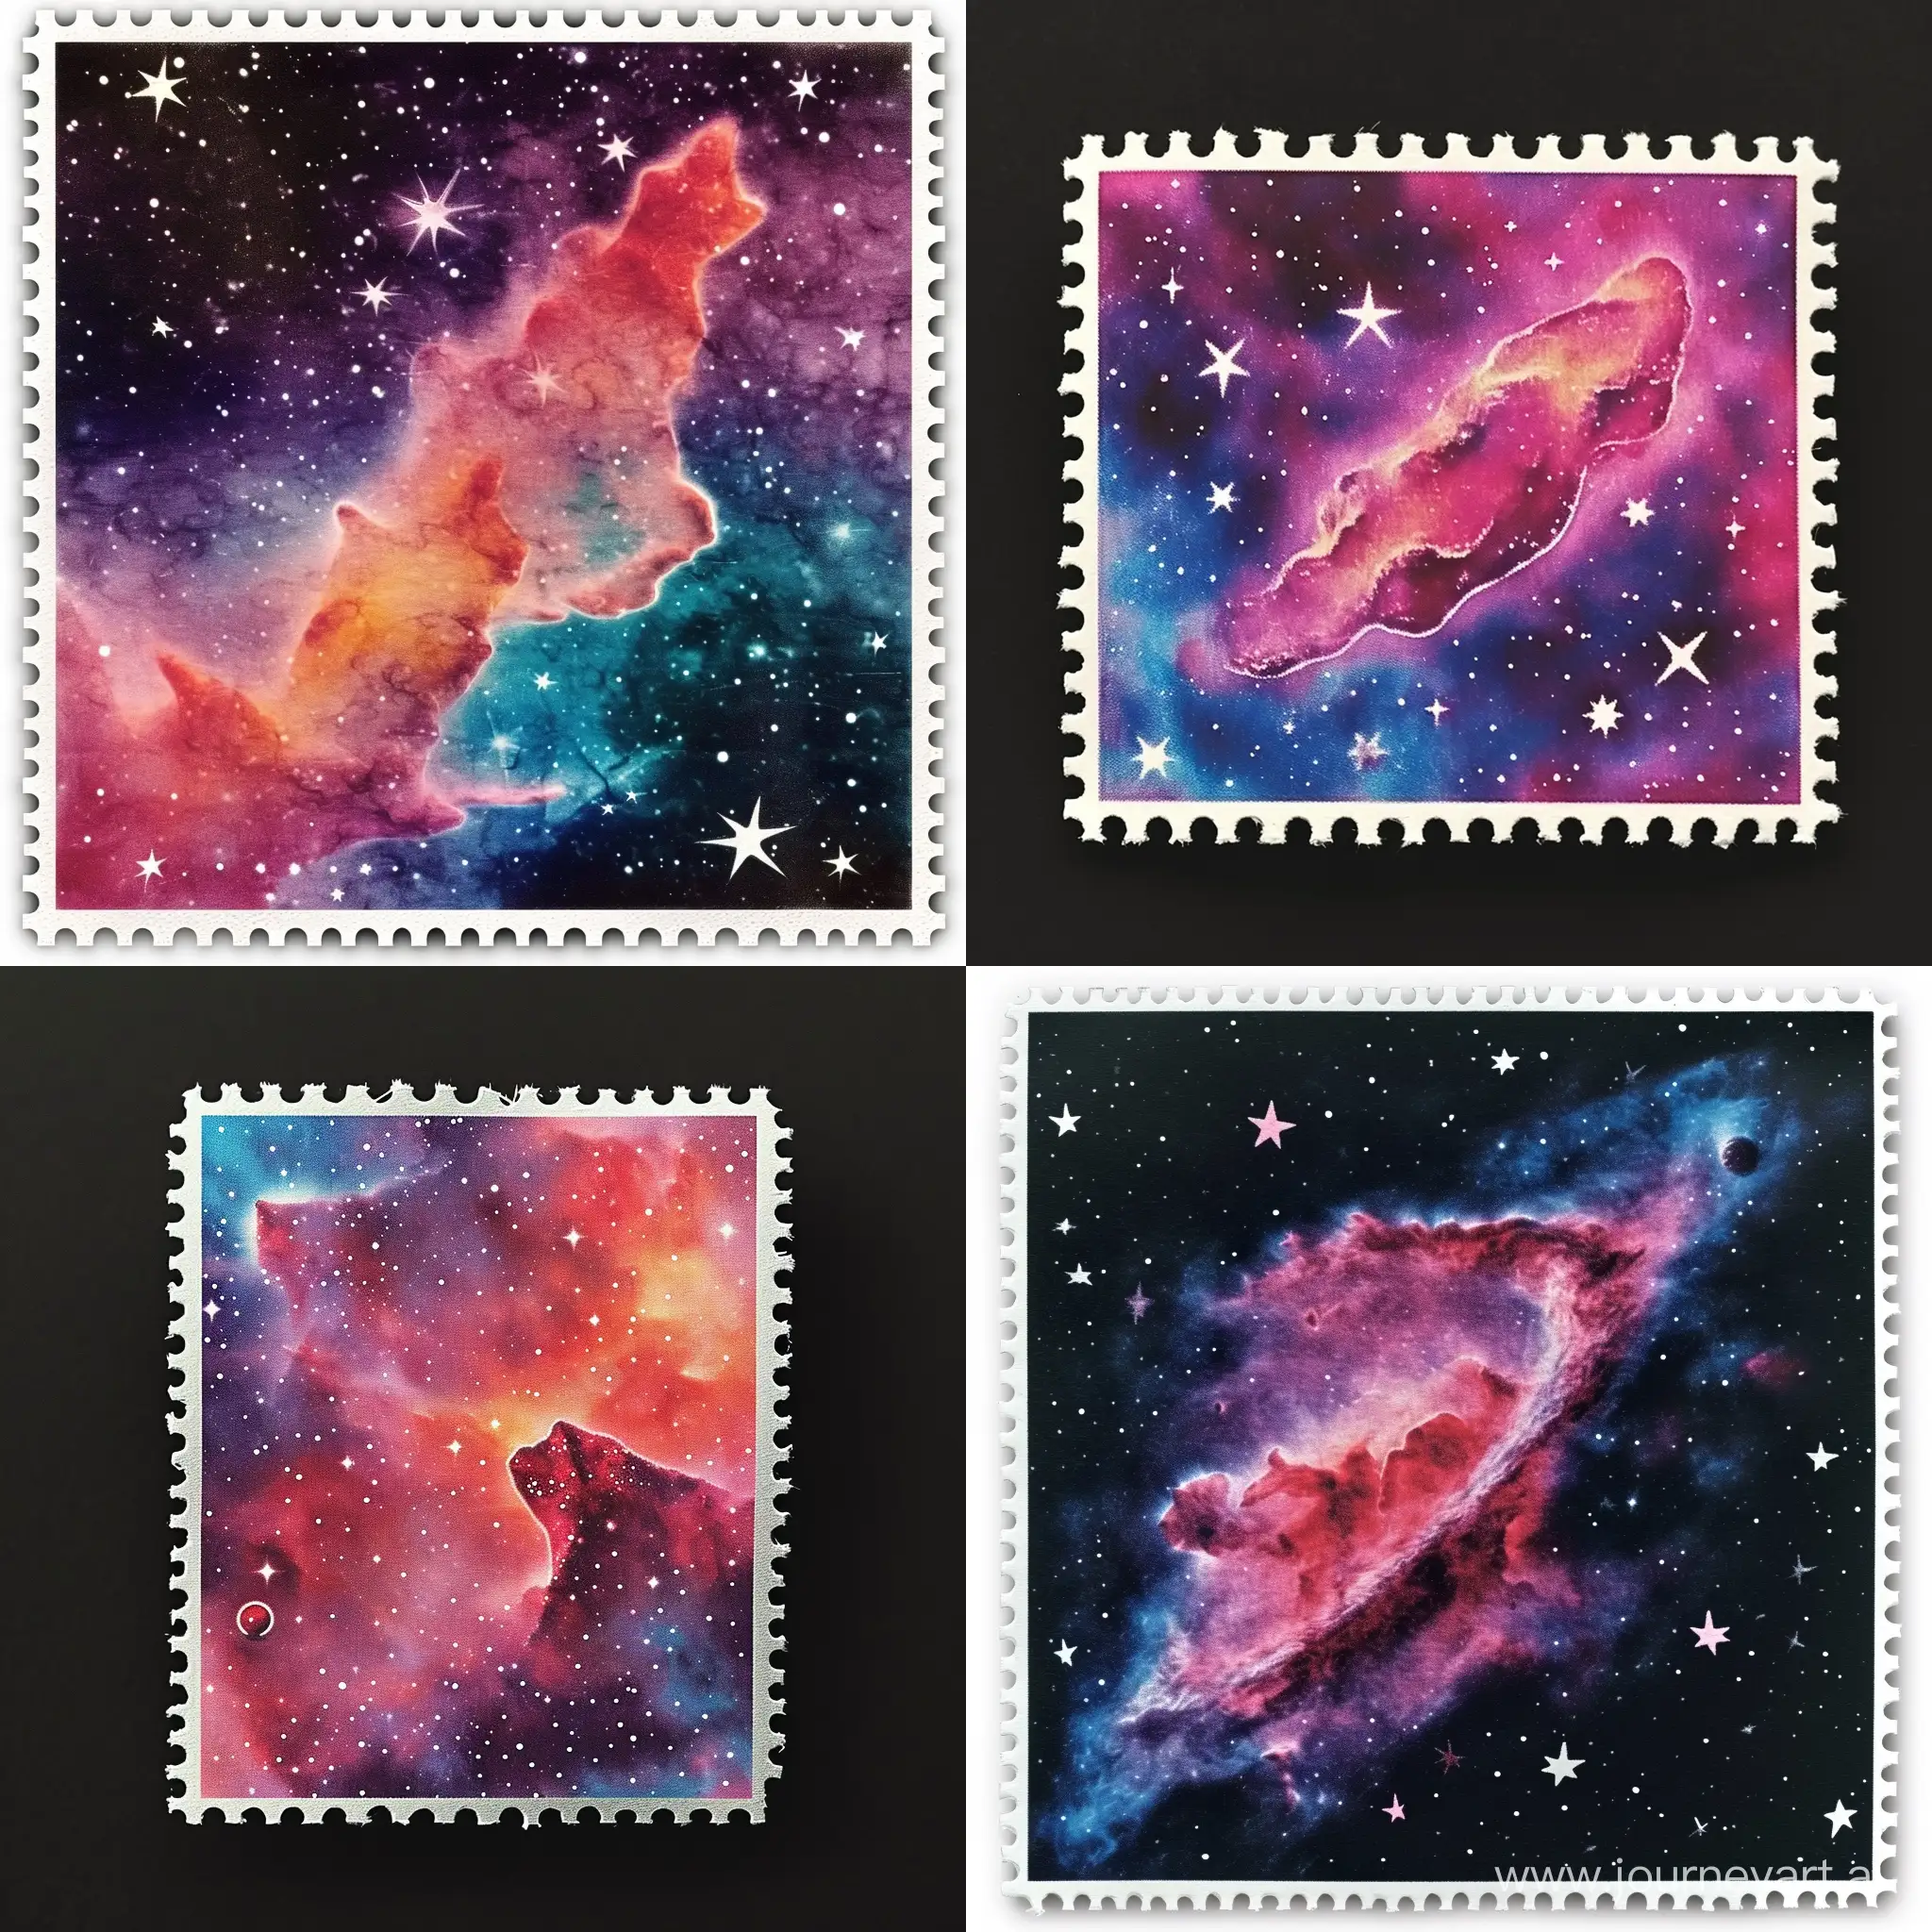 почтовая марка на тему космоса, минимализм